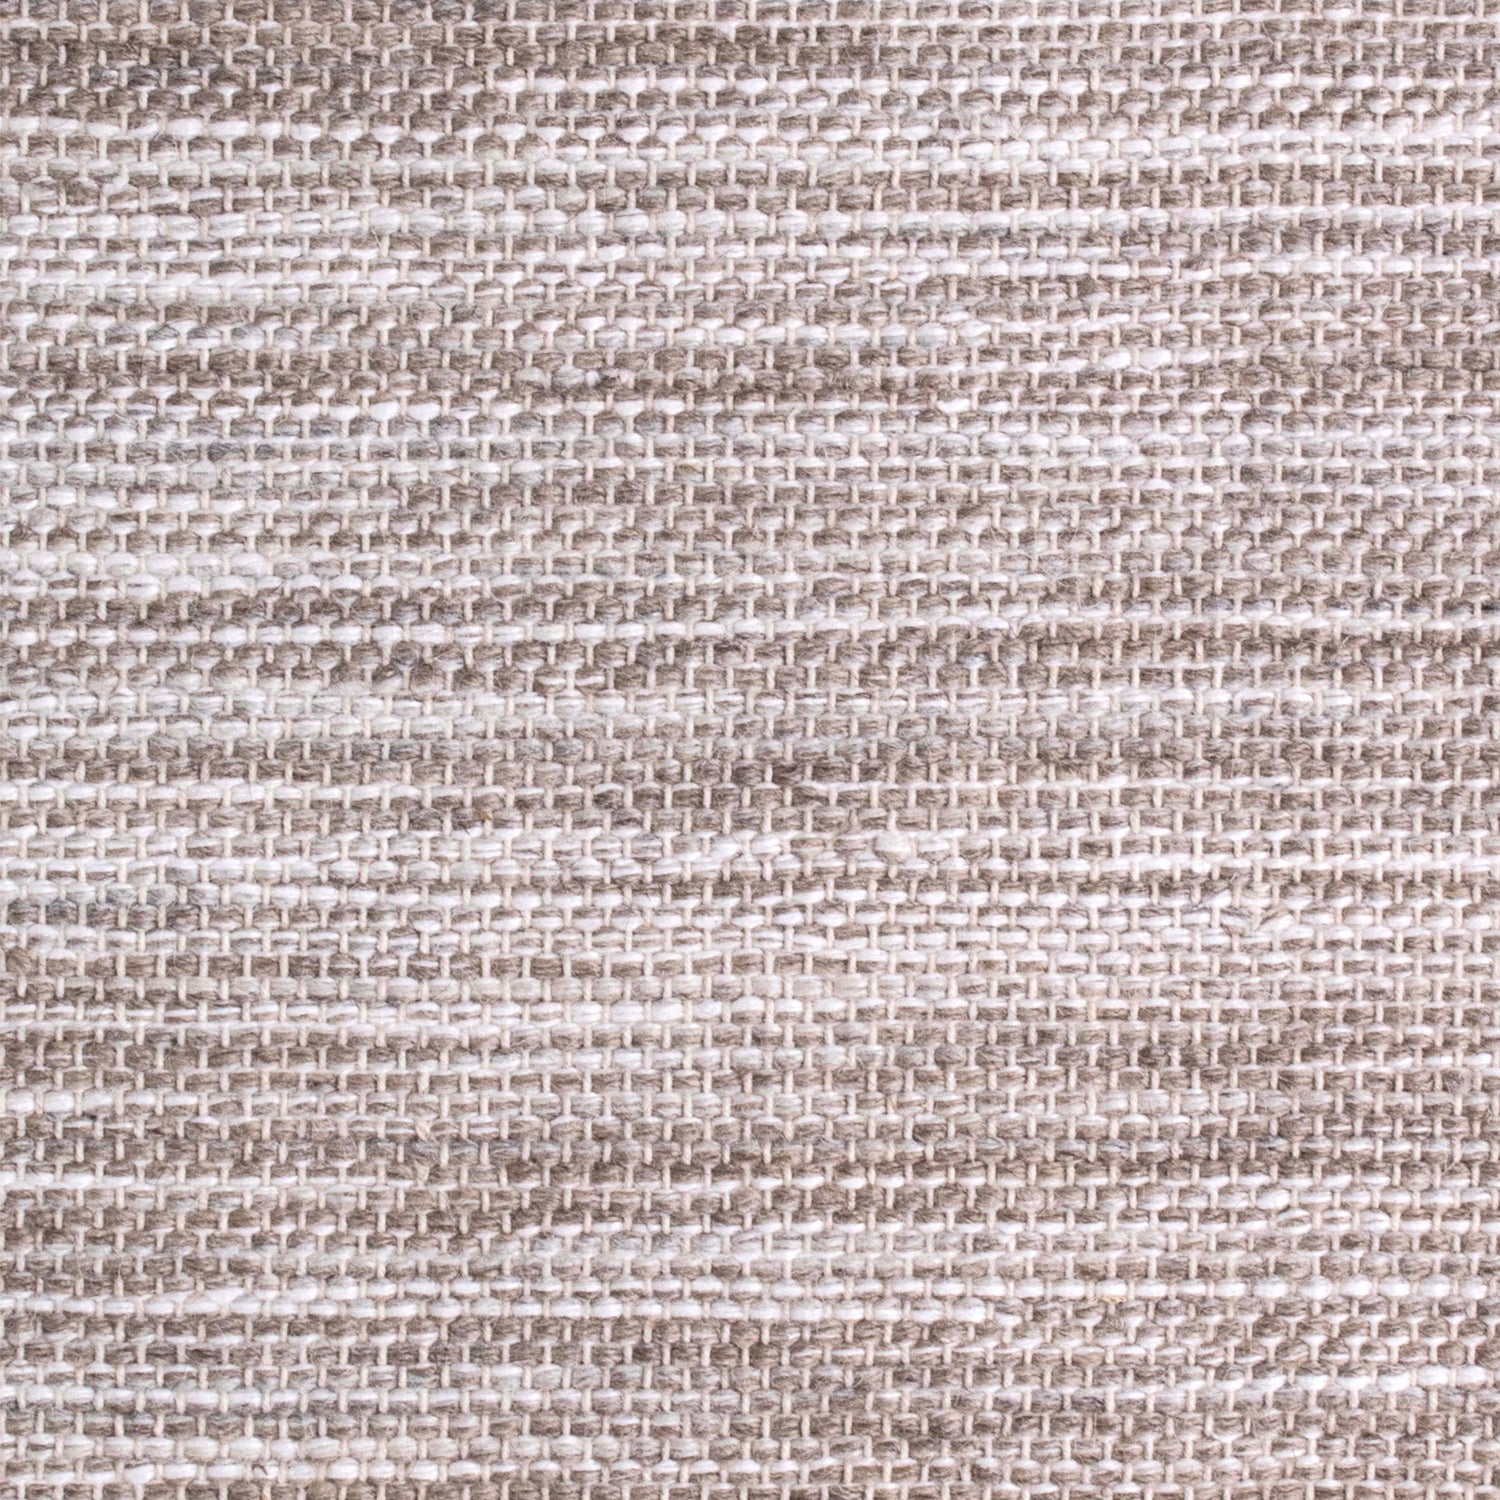 Wool-blend broadloom carpet swatch in a textured stripe weave in cream and brown.